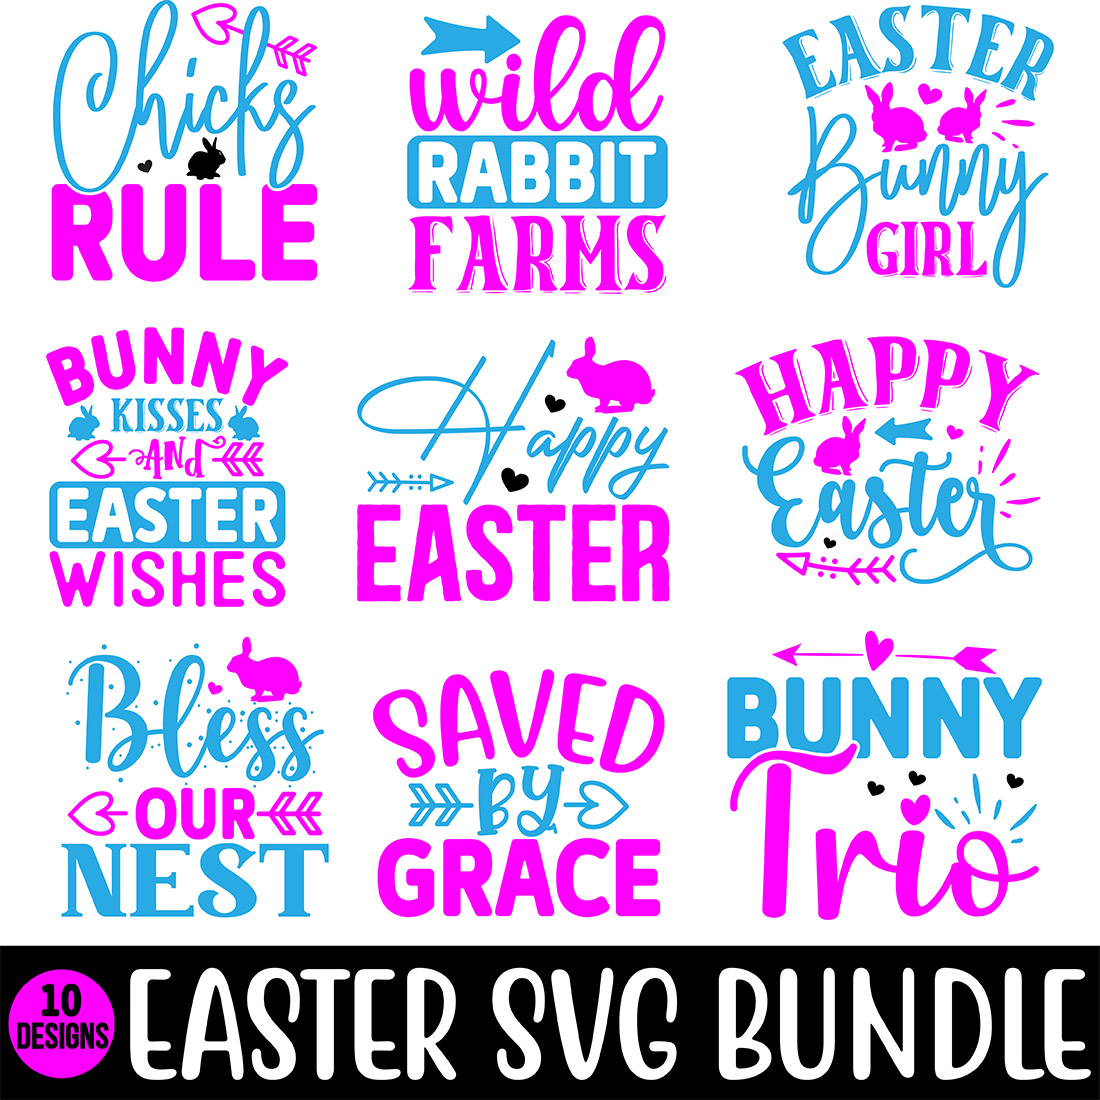 Easter SVG Bundle main cover.